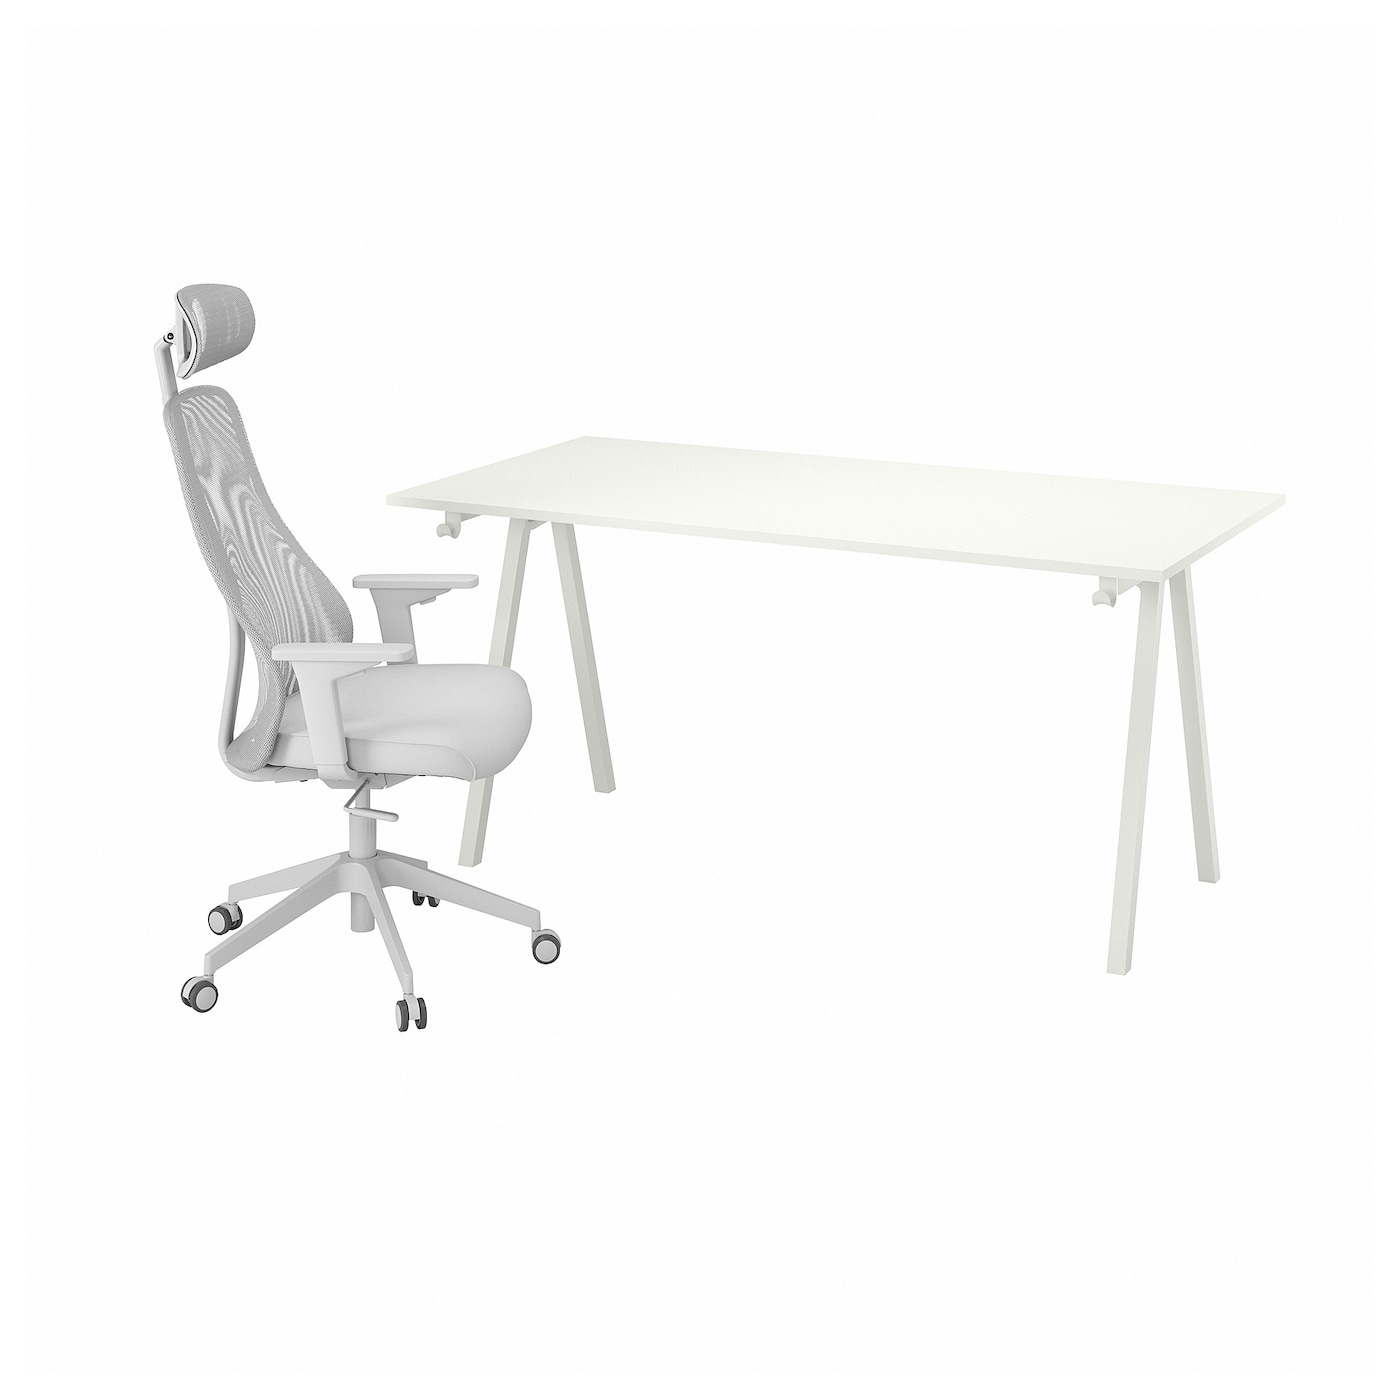 Стол и стул - IKEA TROTTEN / MATCHSPEL, белый/серый, ТРОТТЕН/МАТЧСПЕЛ ИКЕА